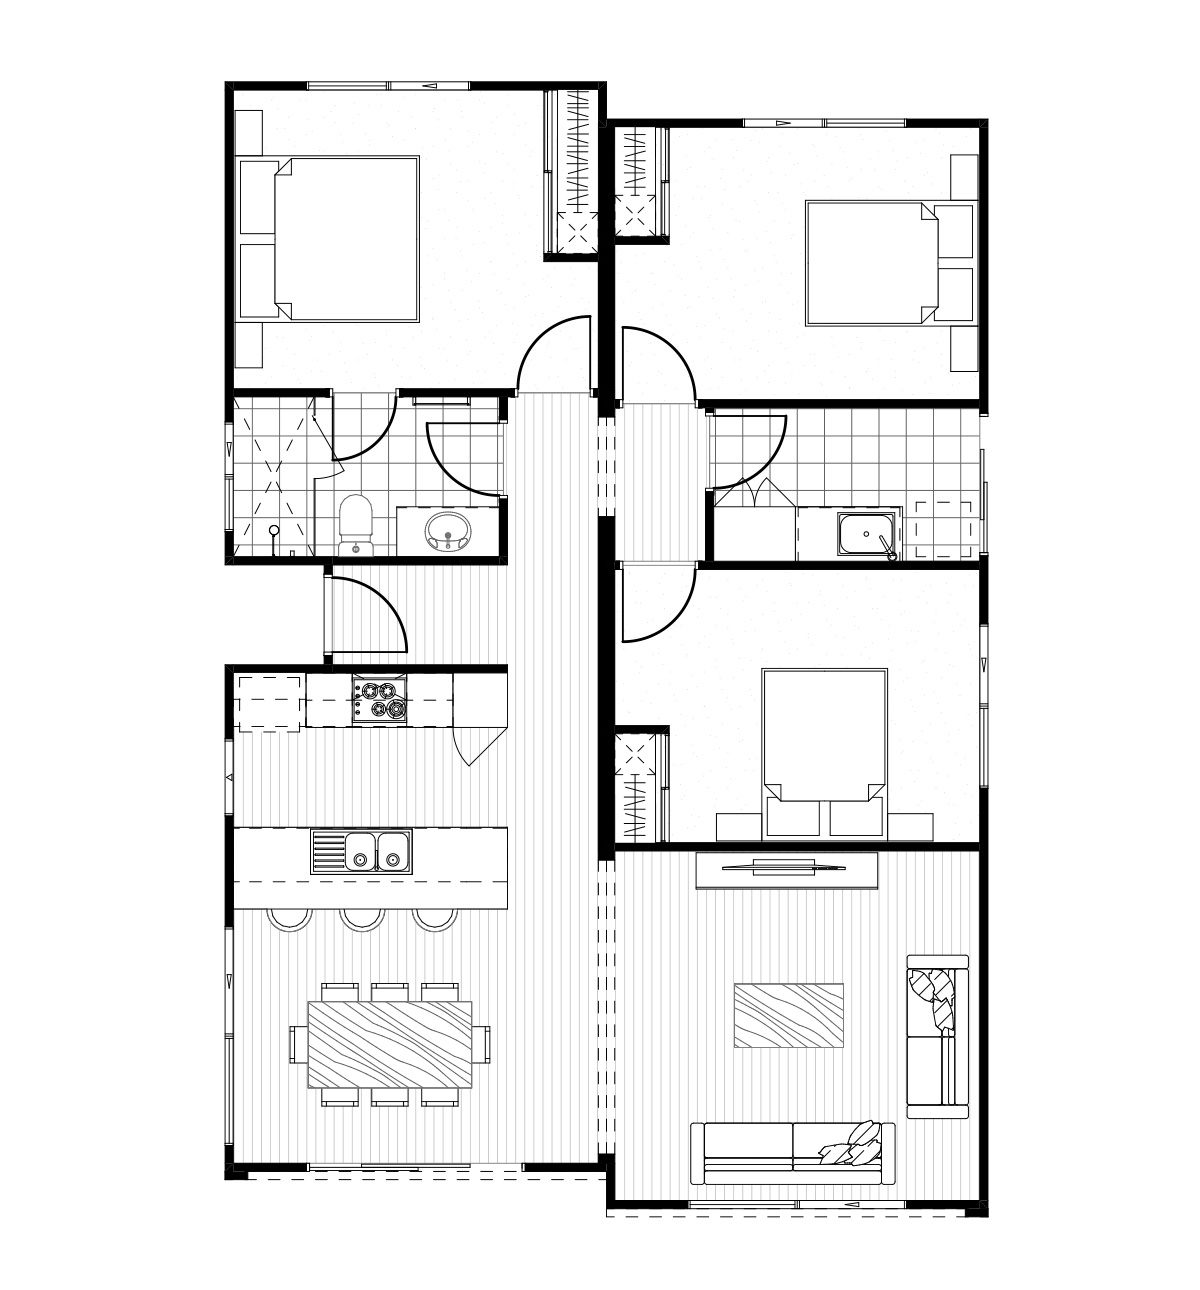 The 3 bedroom floorplan designed by Fox Modular for the Hamersley design